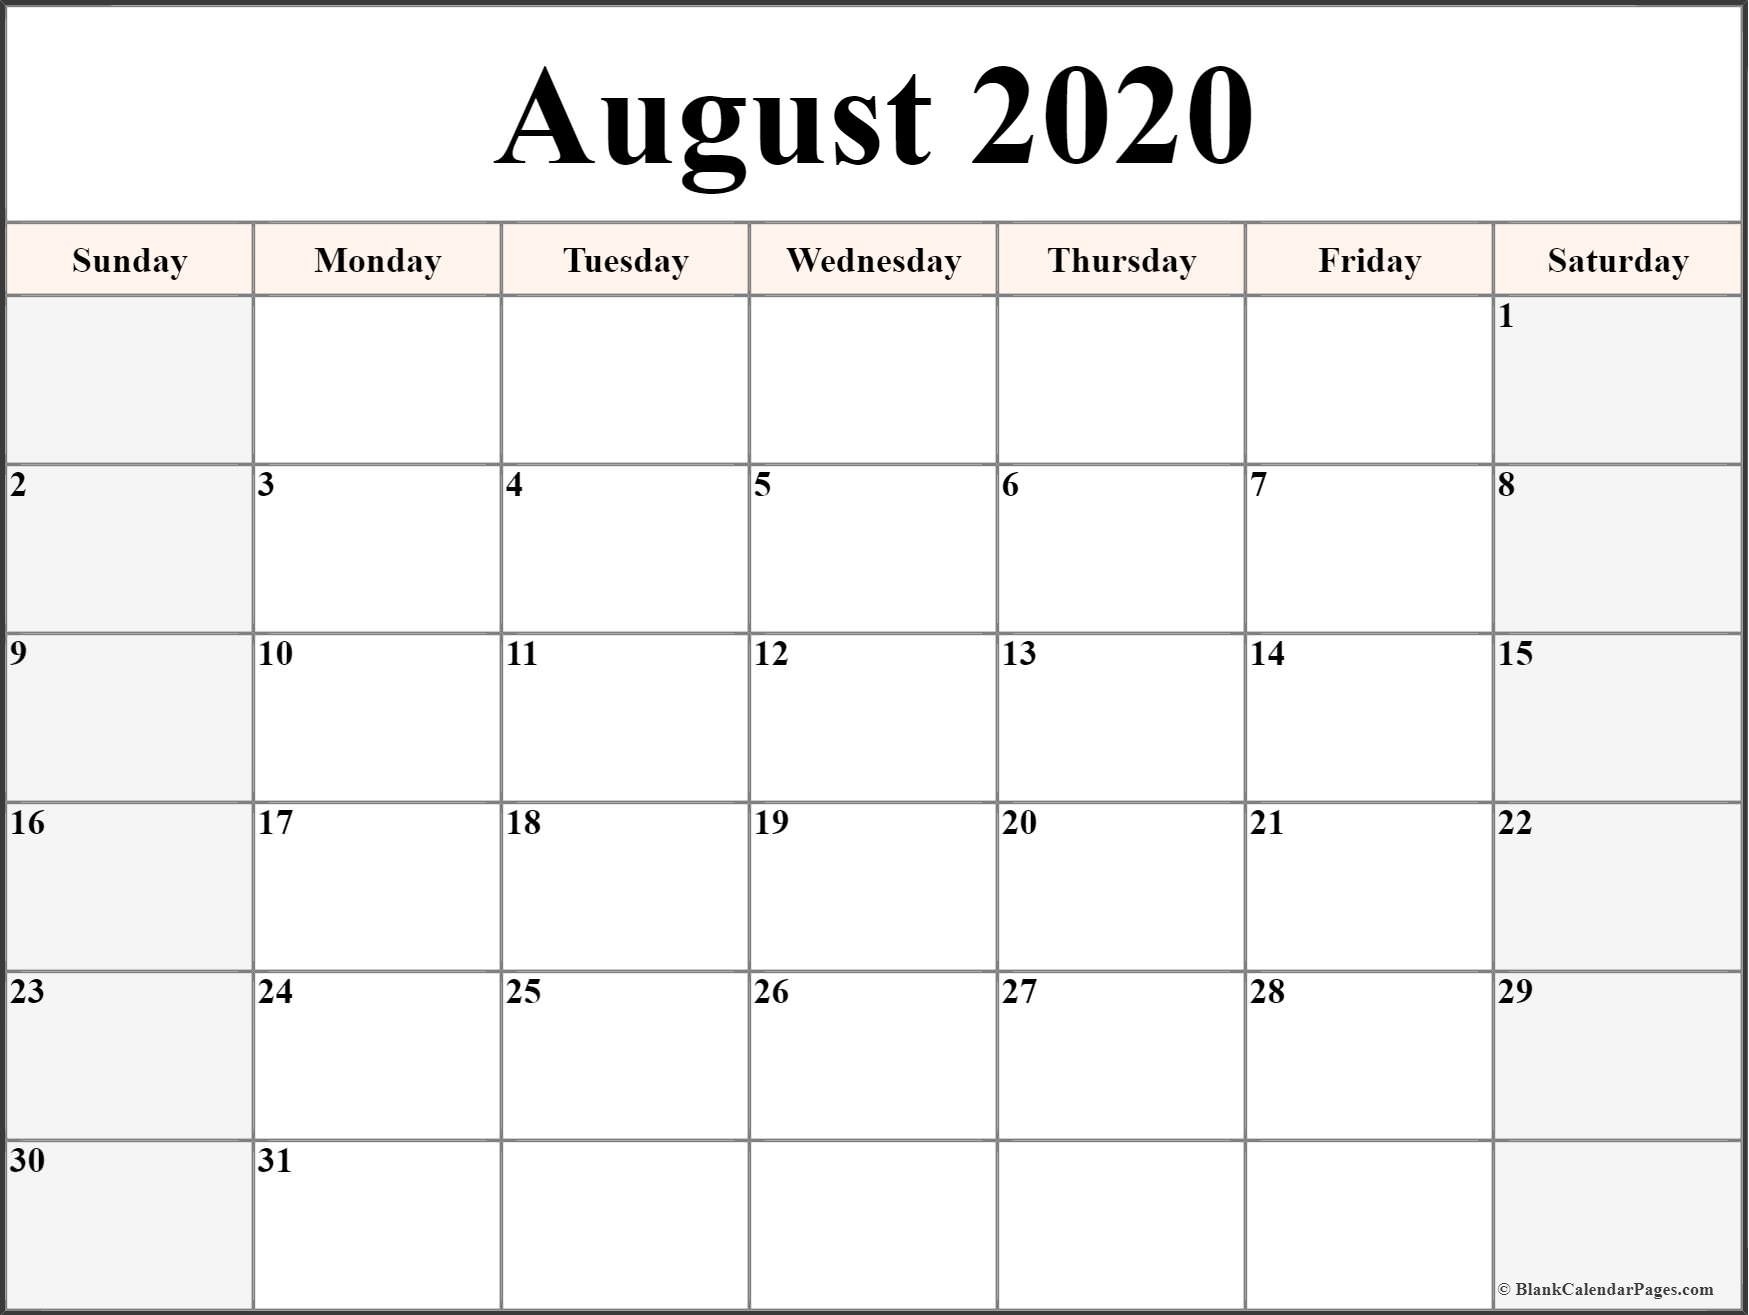 August 2020 Calendar | Free Printable Monthly Calendars-August 2020 Colorful Calendar Template